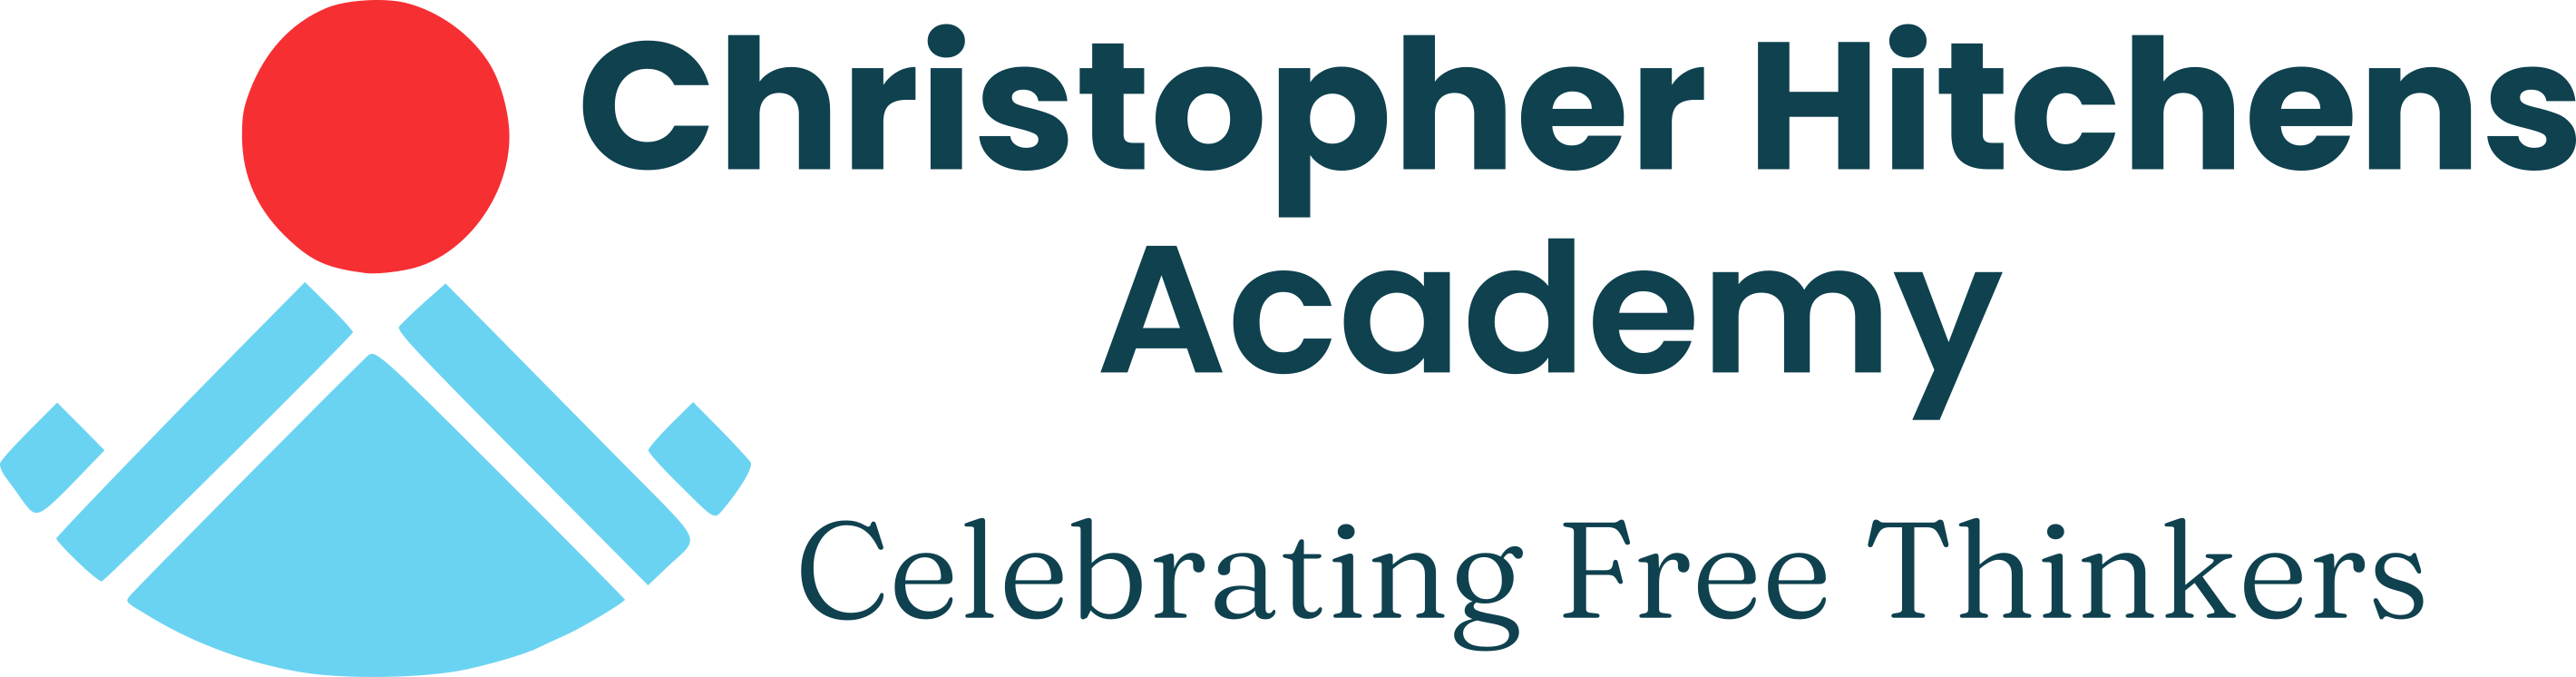 Christopher Hitchens Academy: Celebrating Free Thinkers